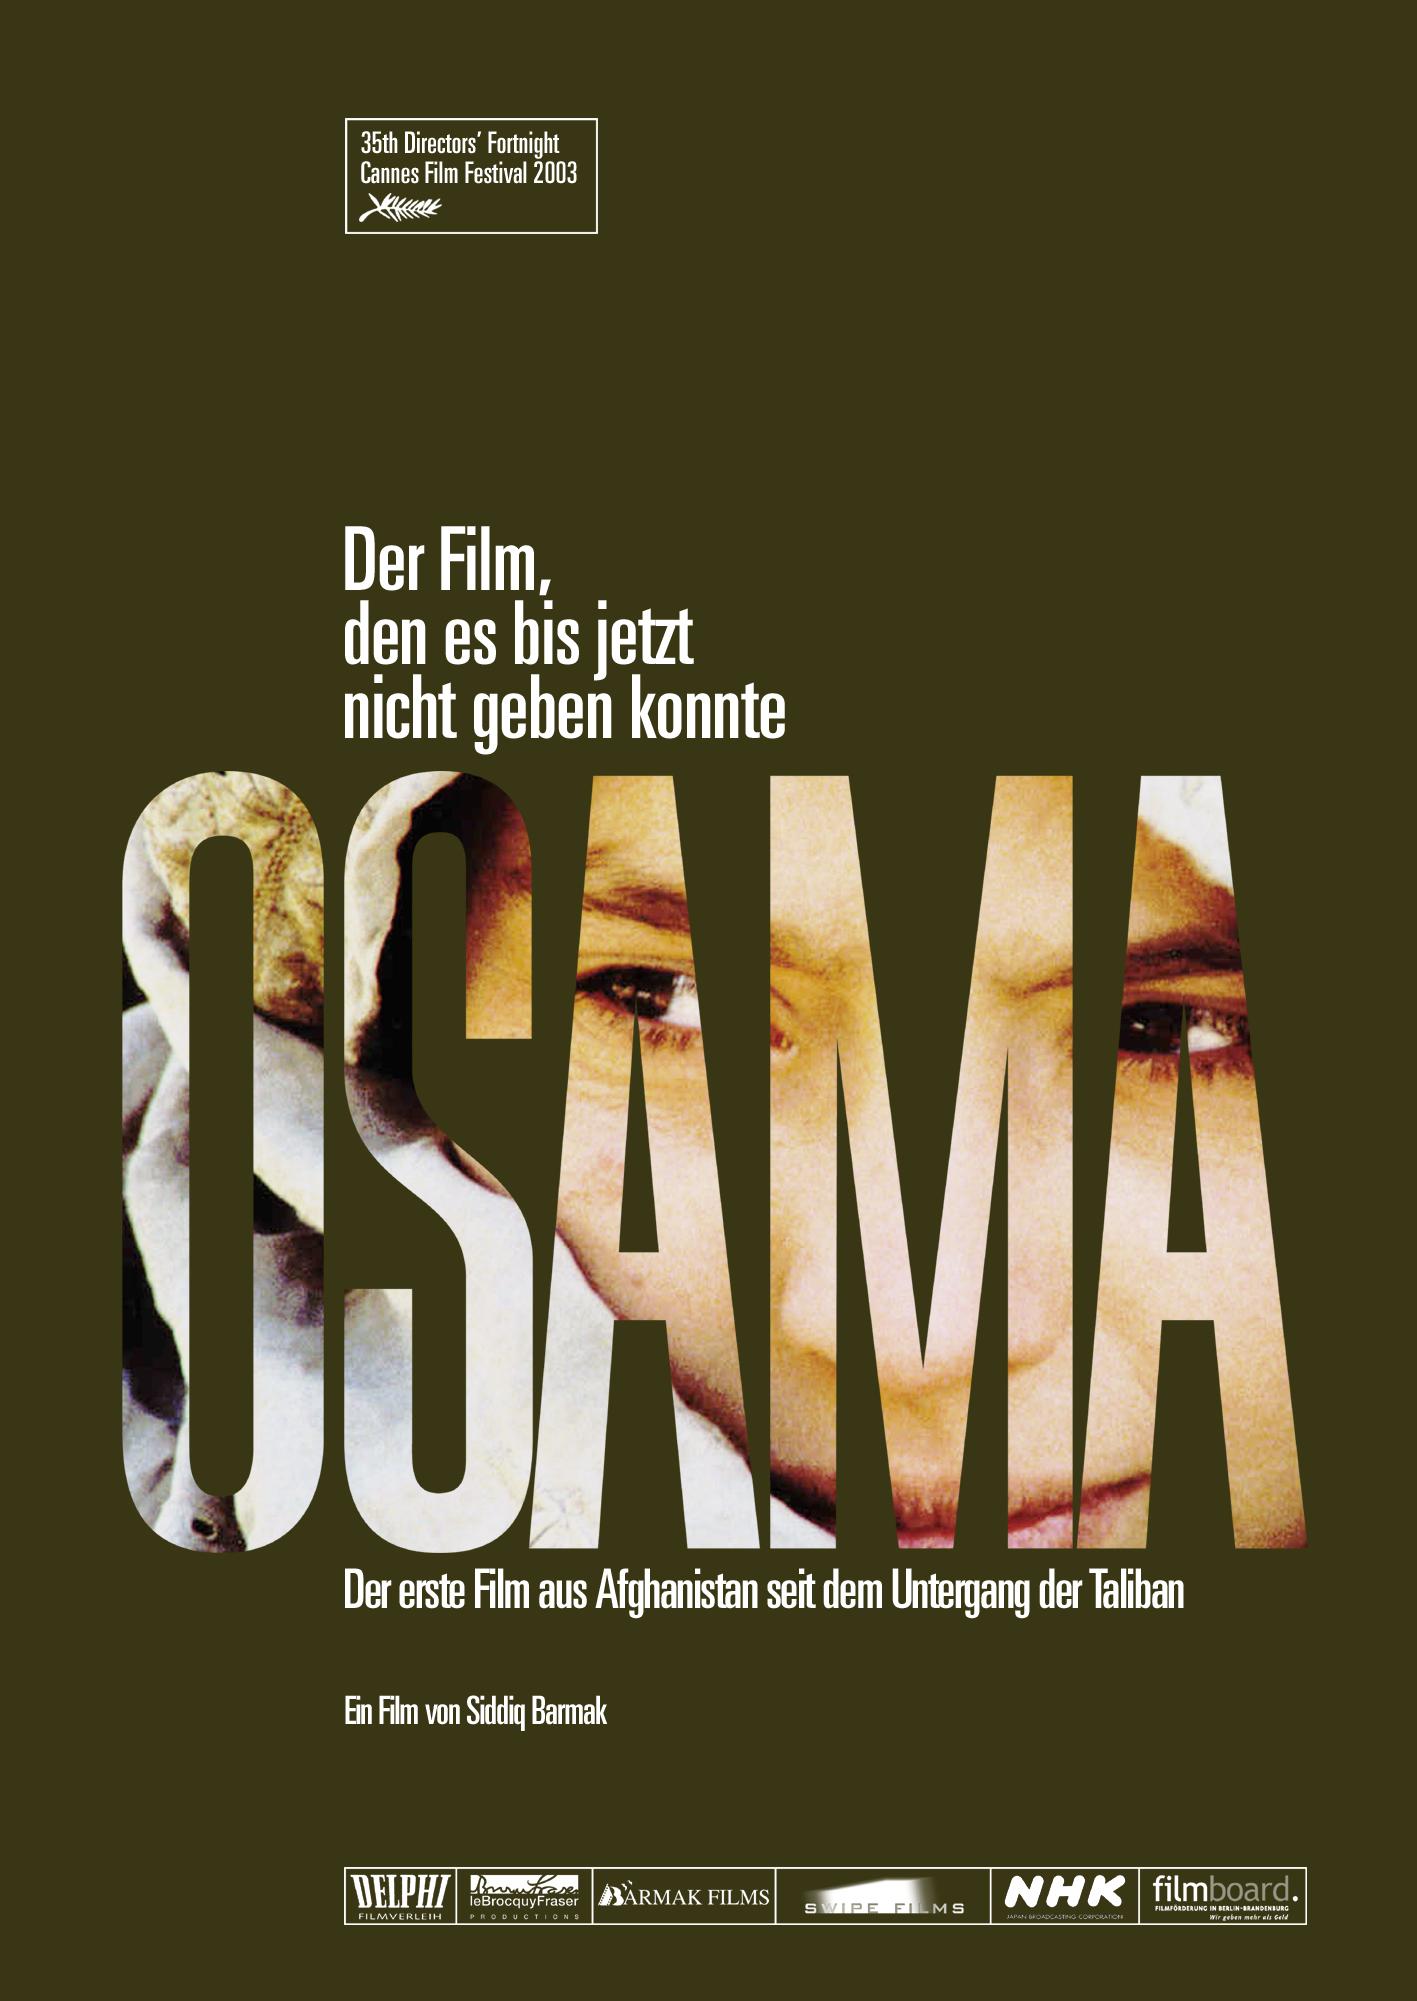 Постер фильма Усама | Osama